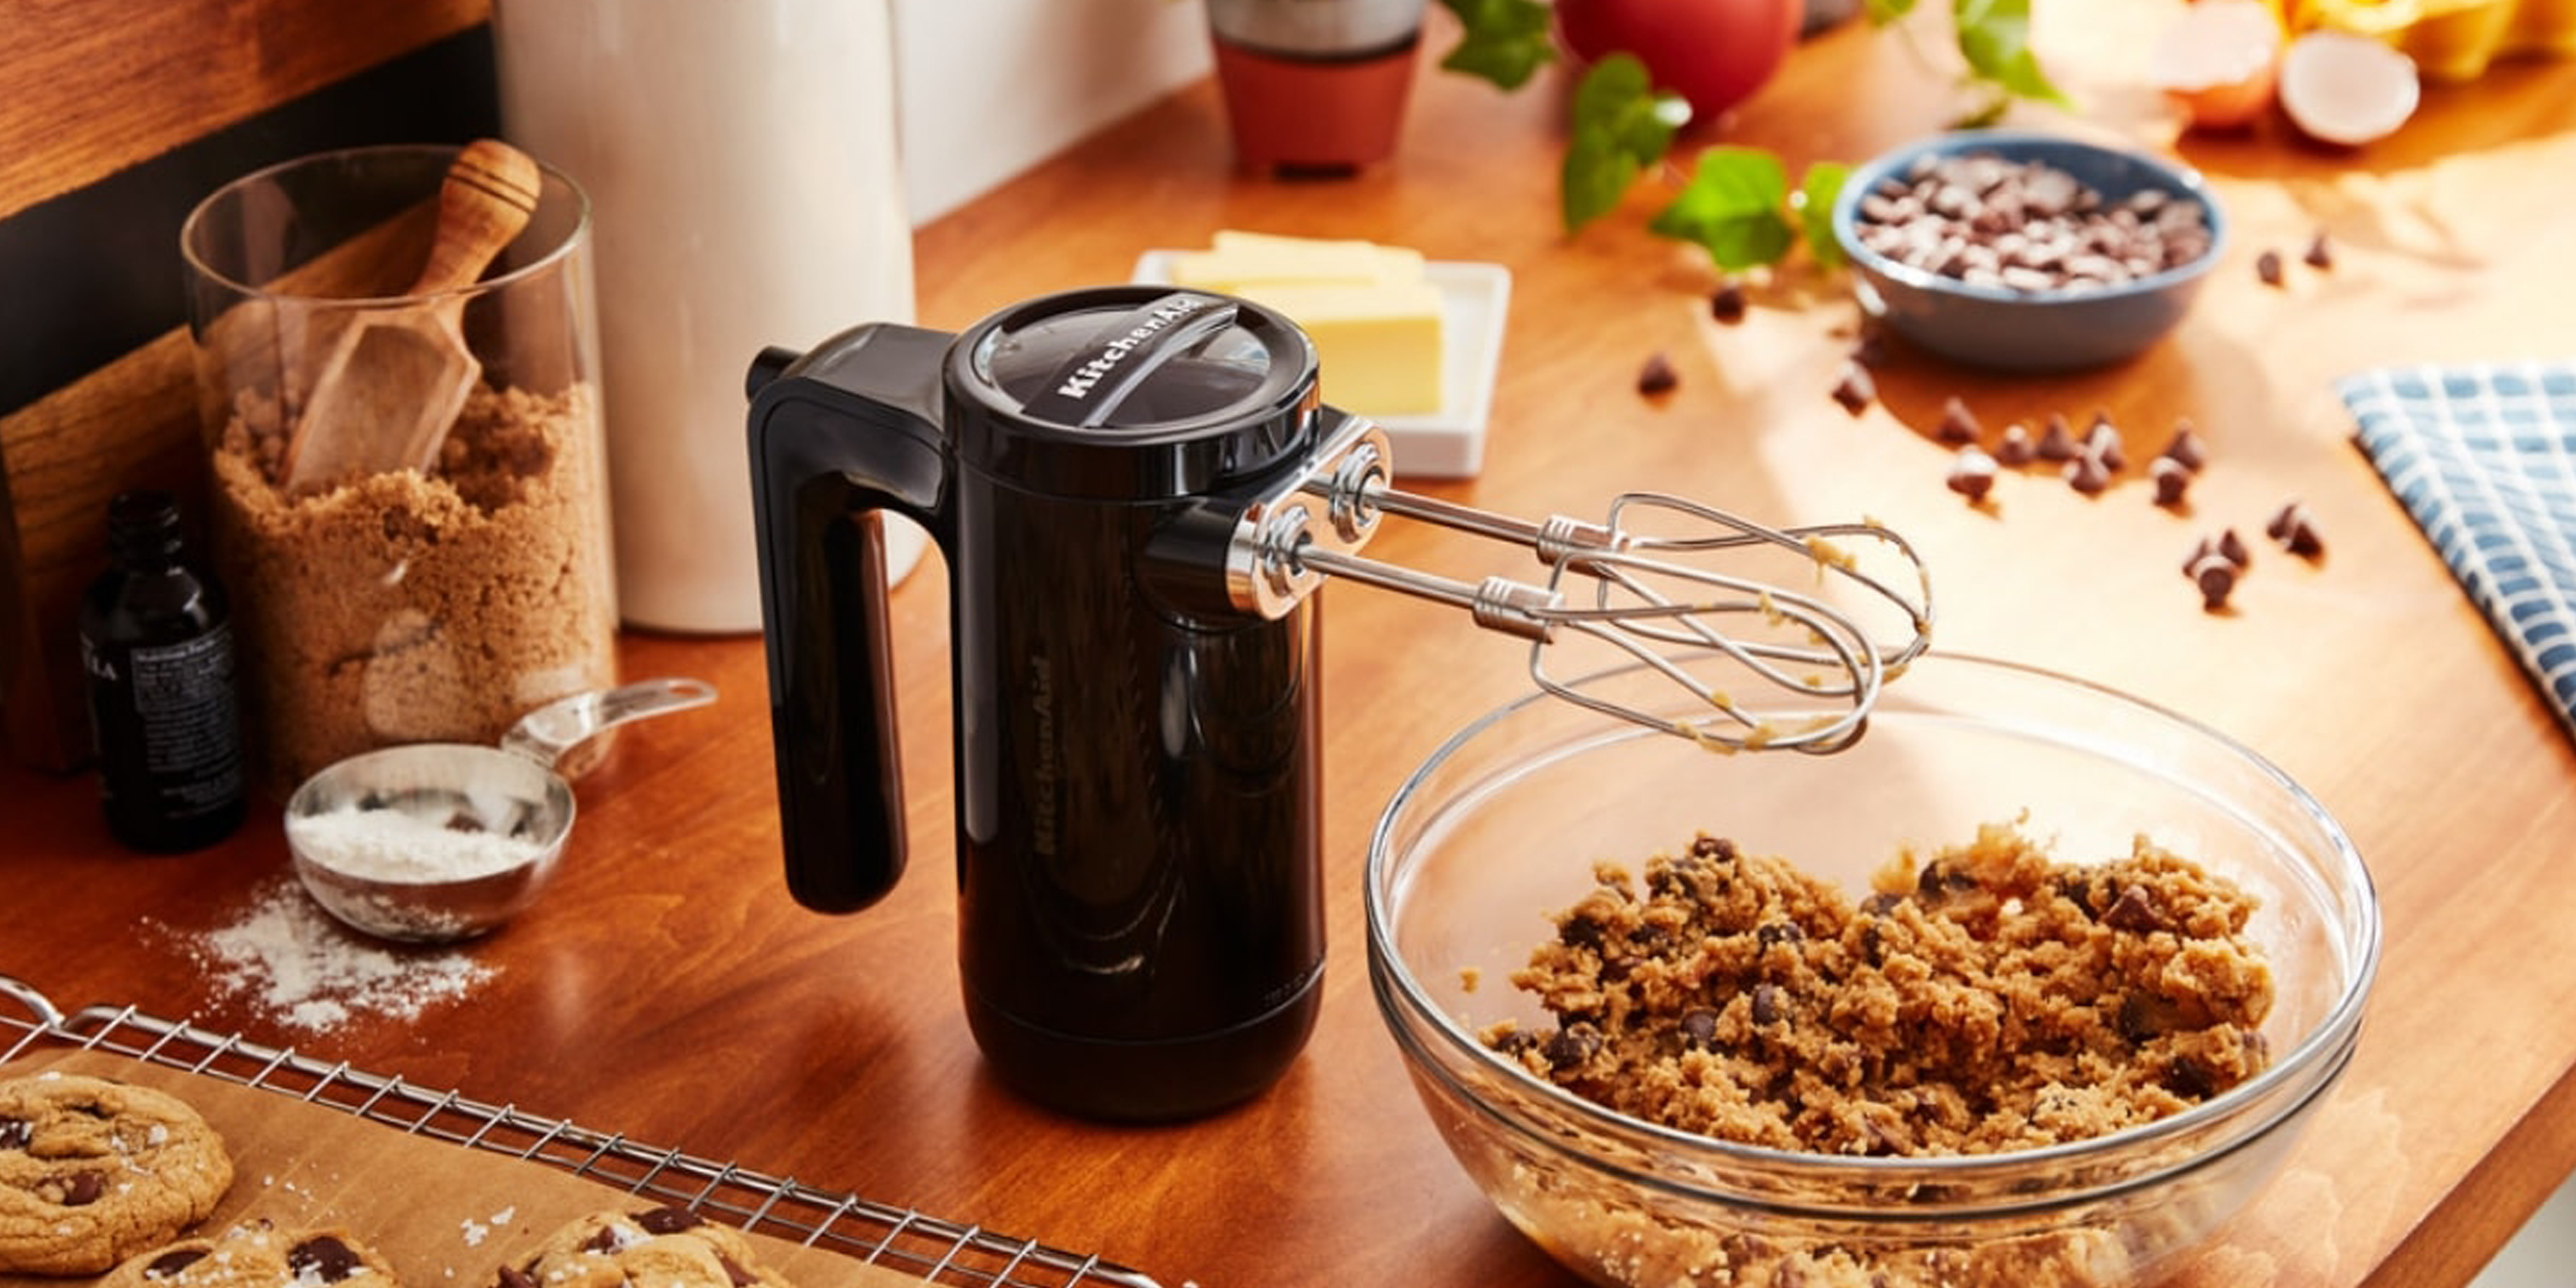 KitchenAid Cordless 7-Speed Hand Mixer w/FlexEdge Beaters ,Almond Cream